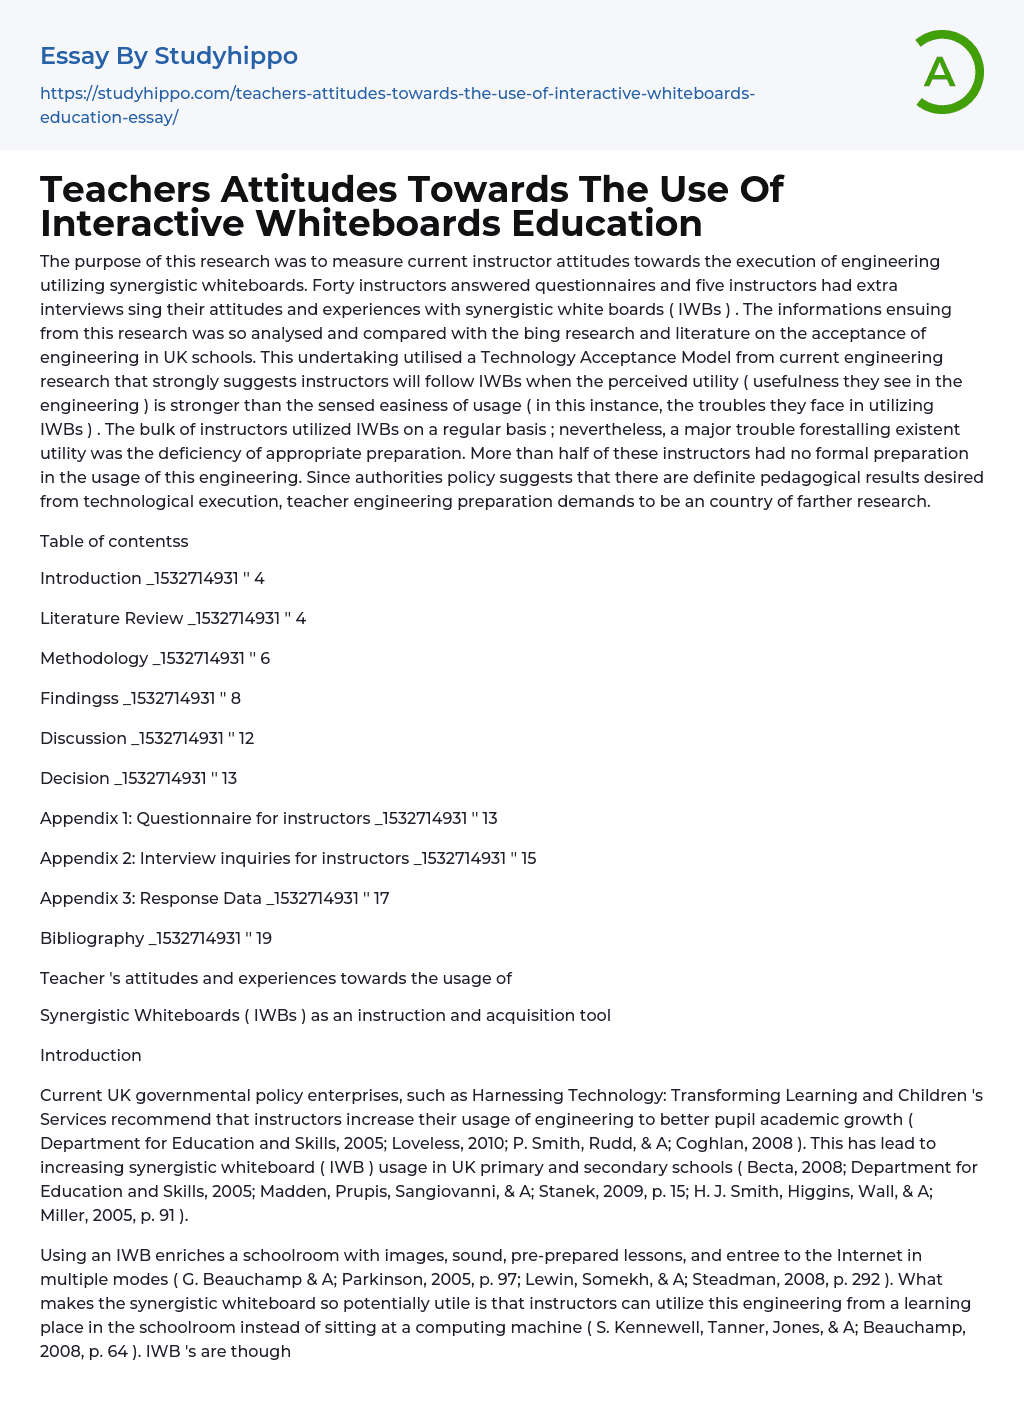 Teachers Attitudes Towards The Use Of Interactive Whiteboards Education Essay Example